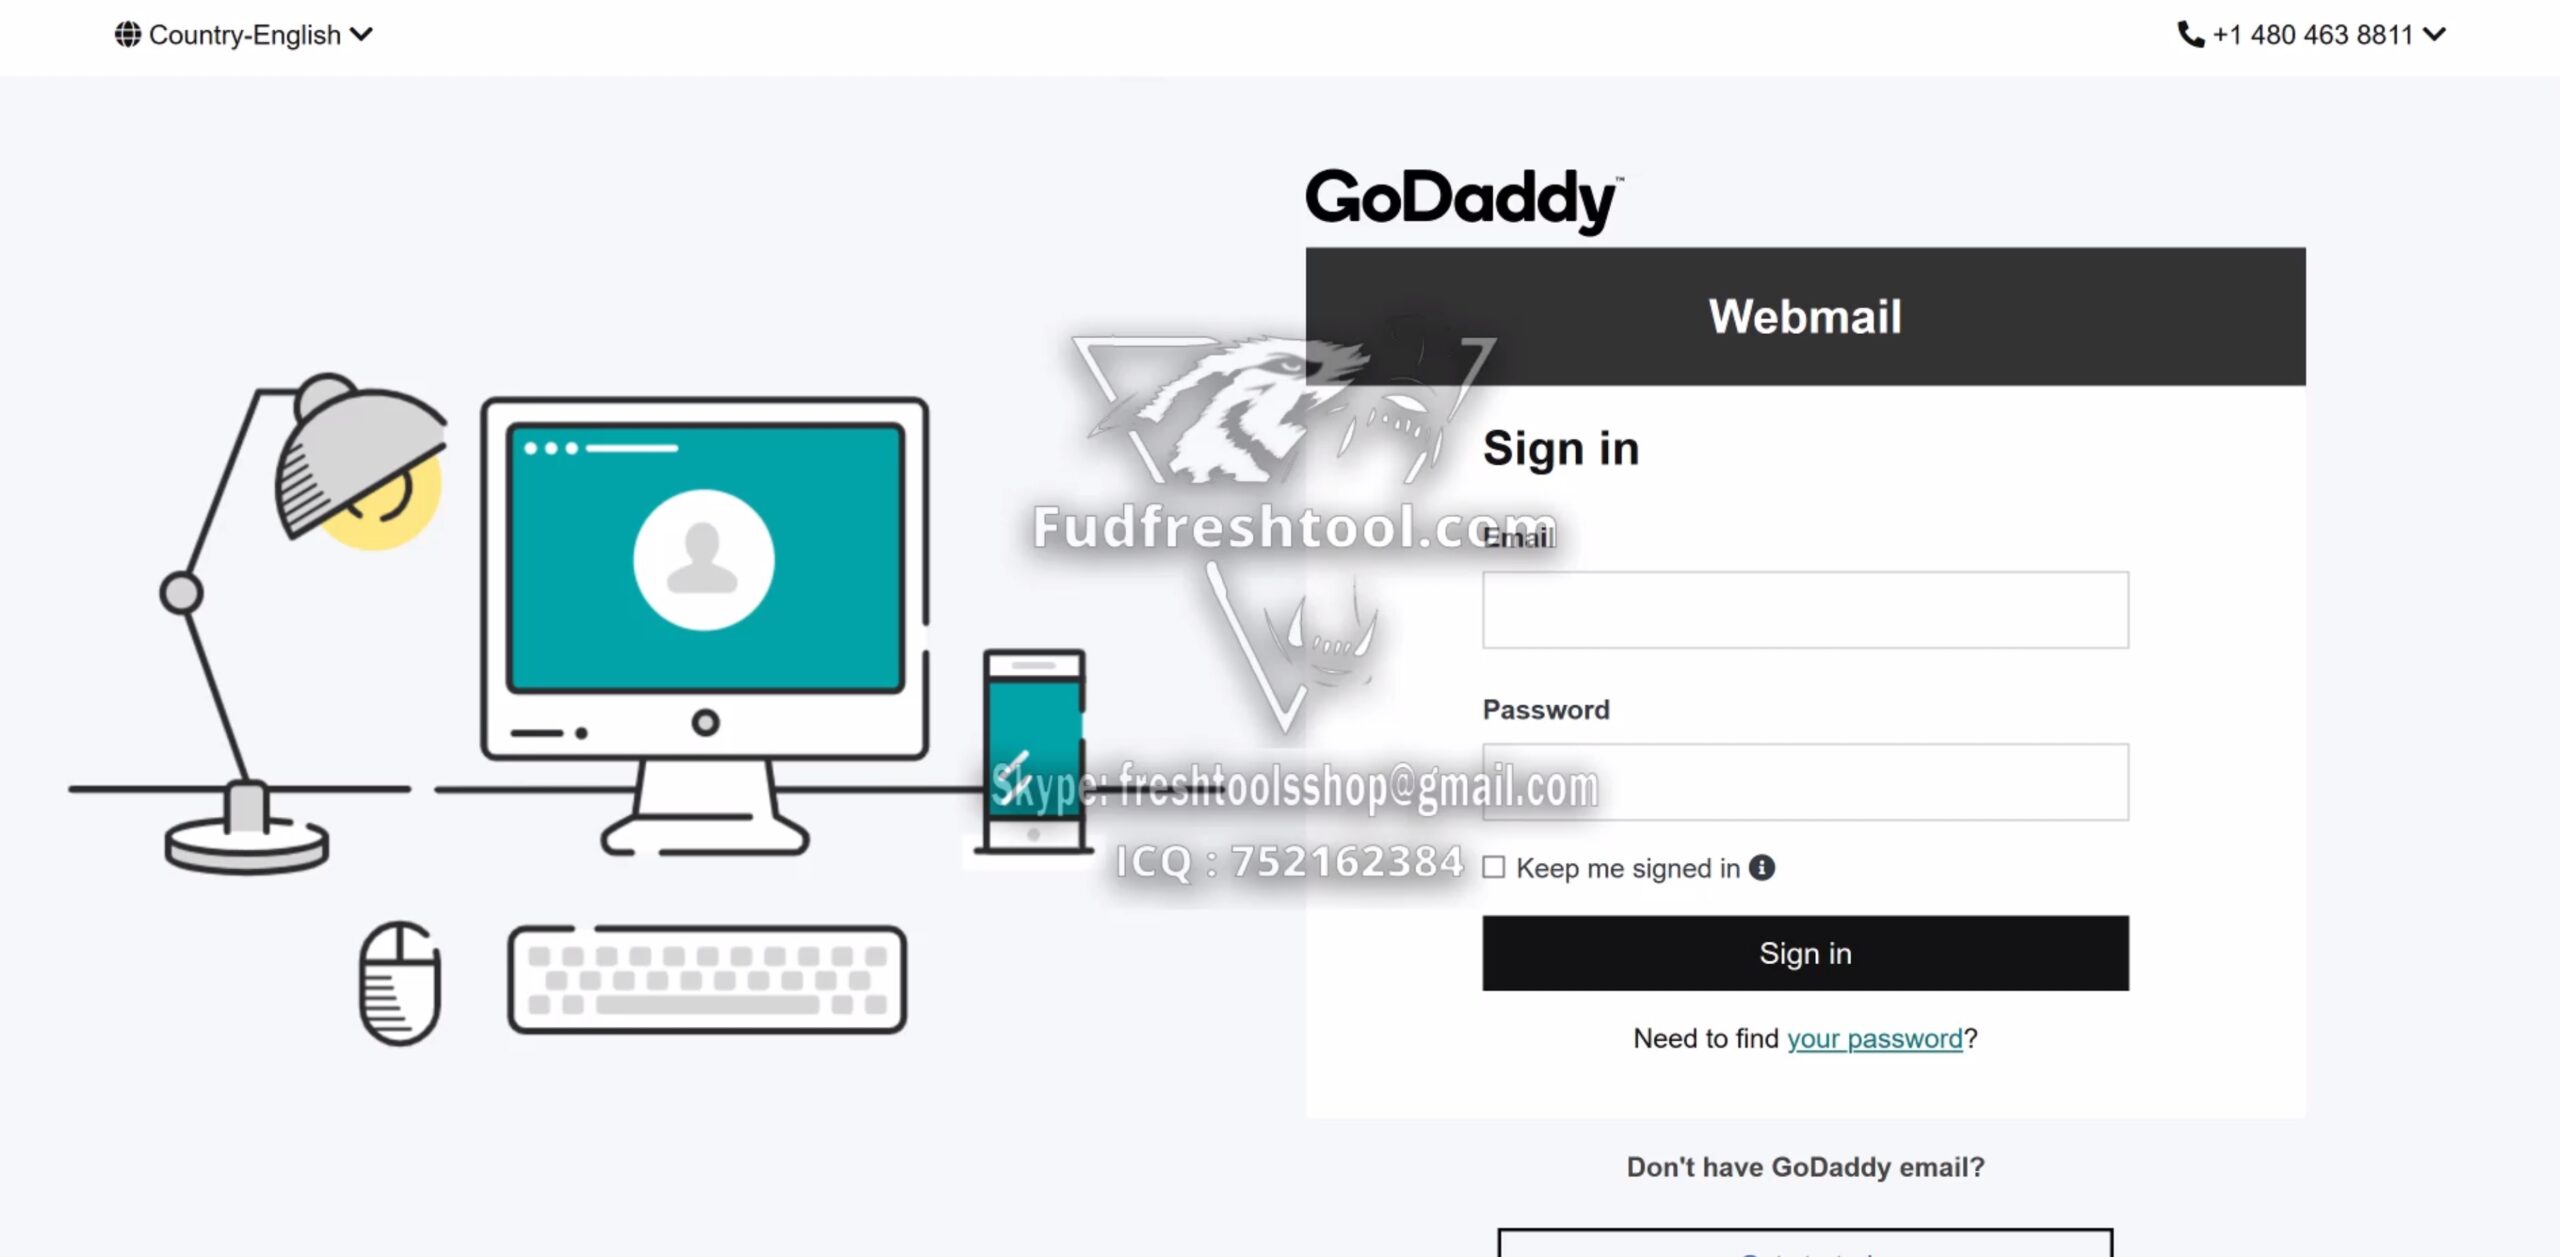 GoDaddy Webmail Scam Page